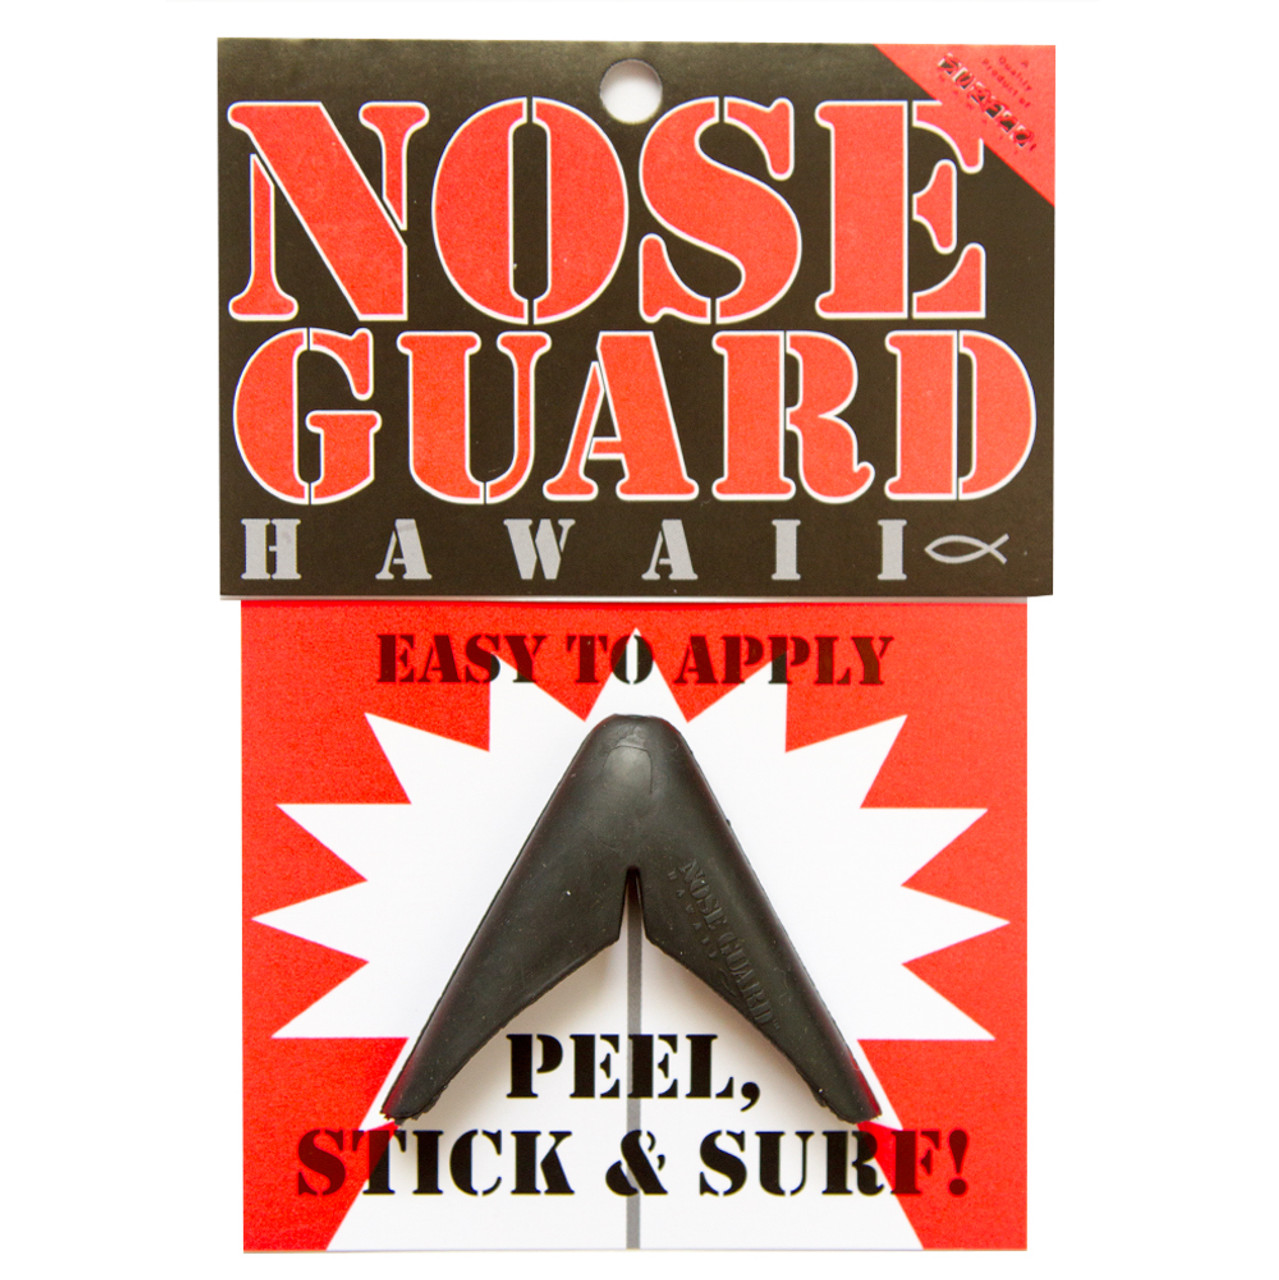 Nose Guard Kit